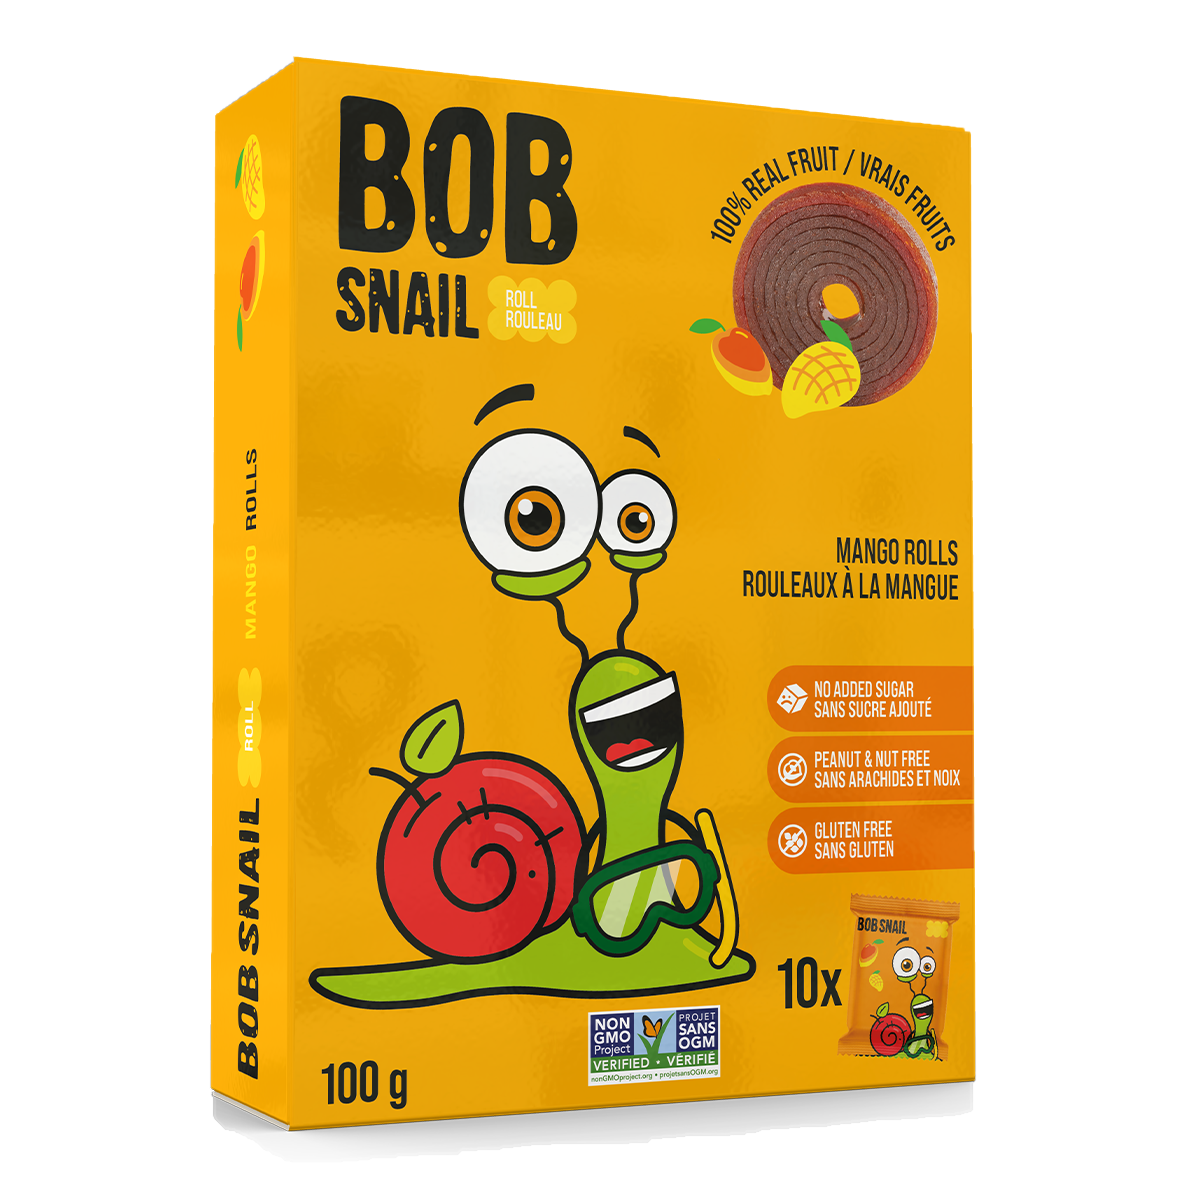 Bob Snail Mango Rolls 10 Count 100g